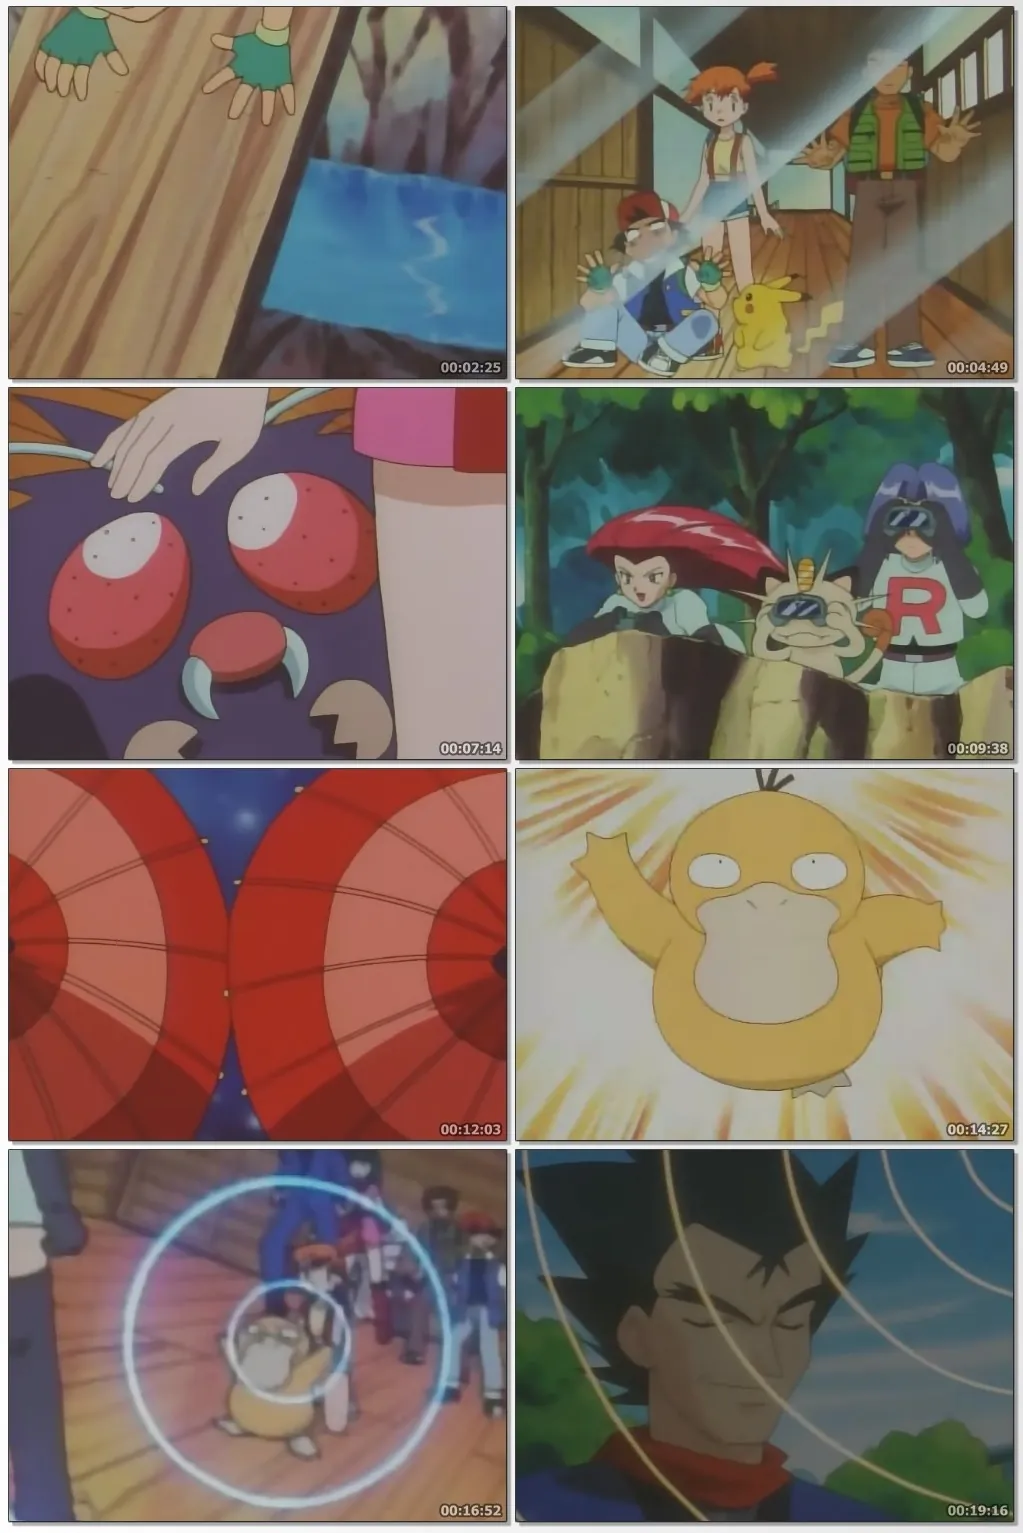 descargar pokemon latino capitulos todas las temporadas 1997